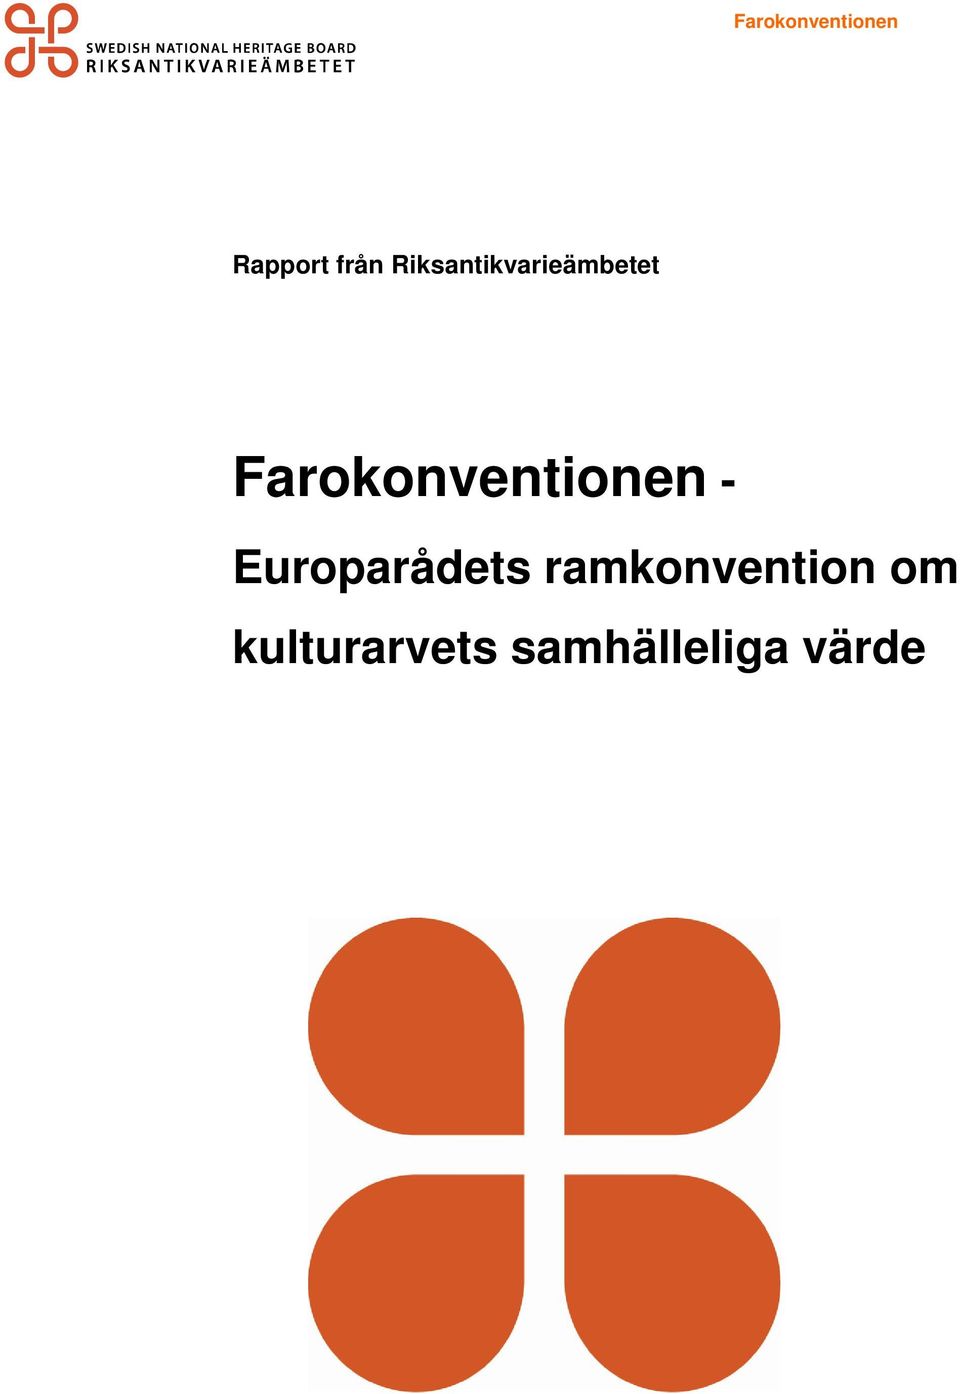 Farokonventionen